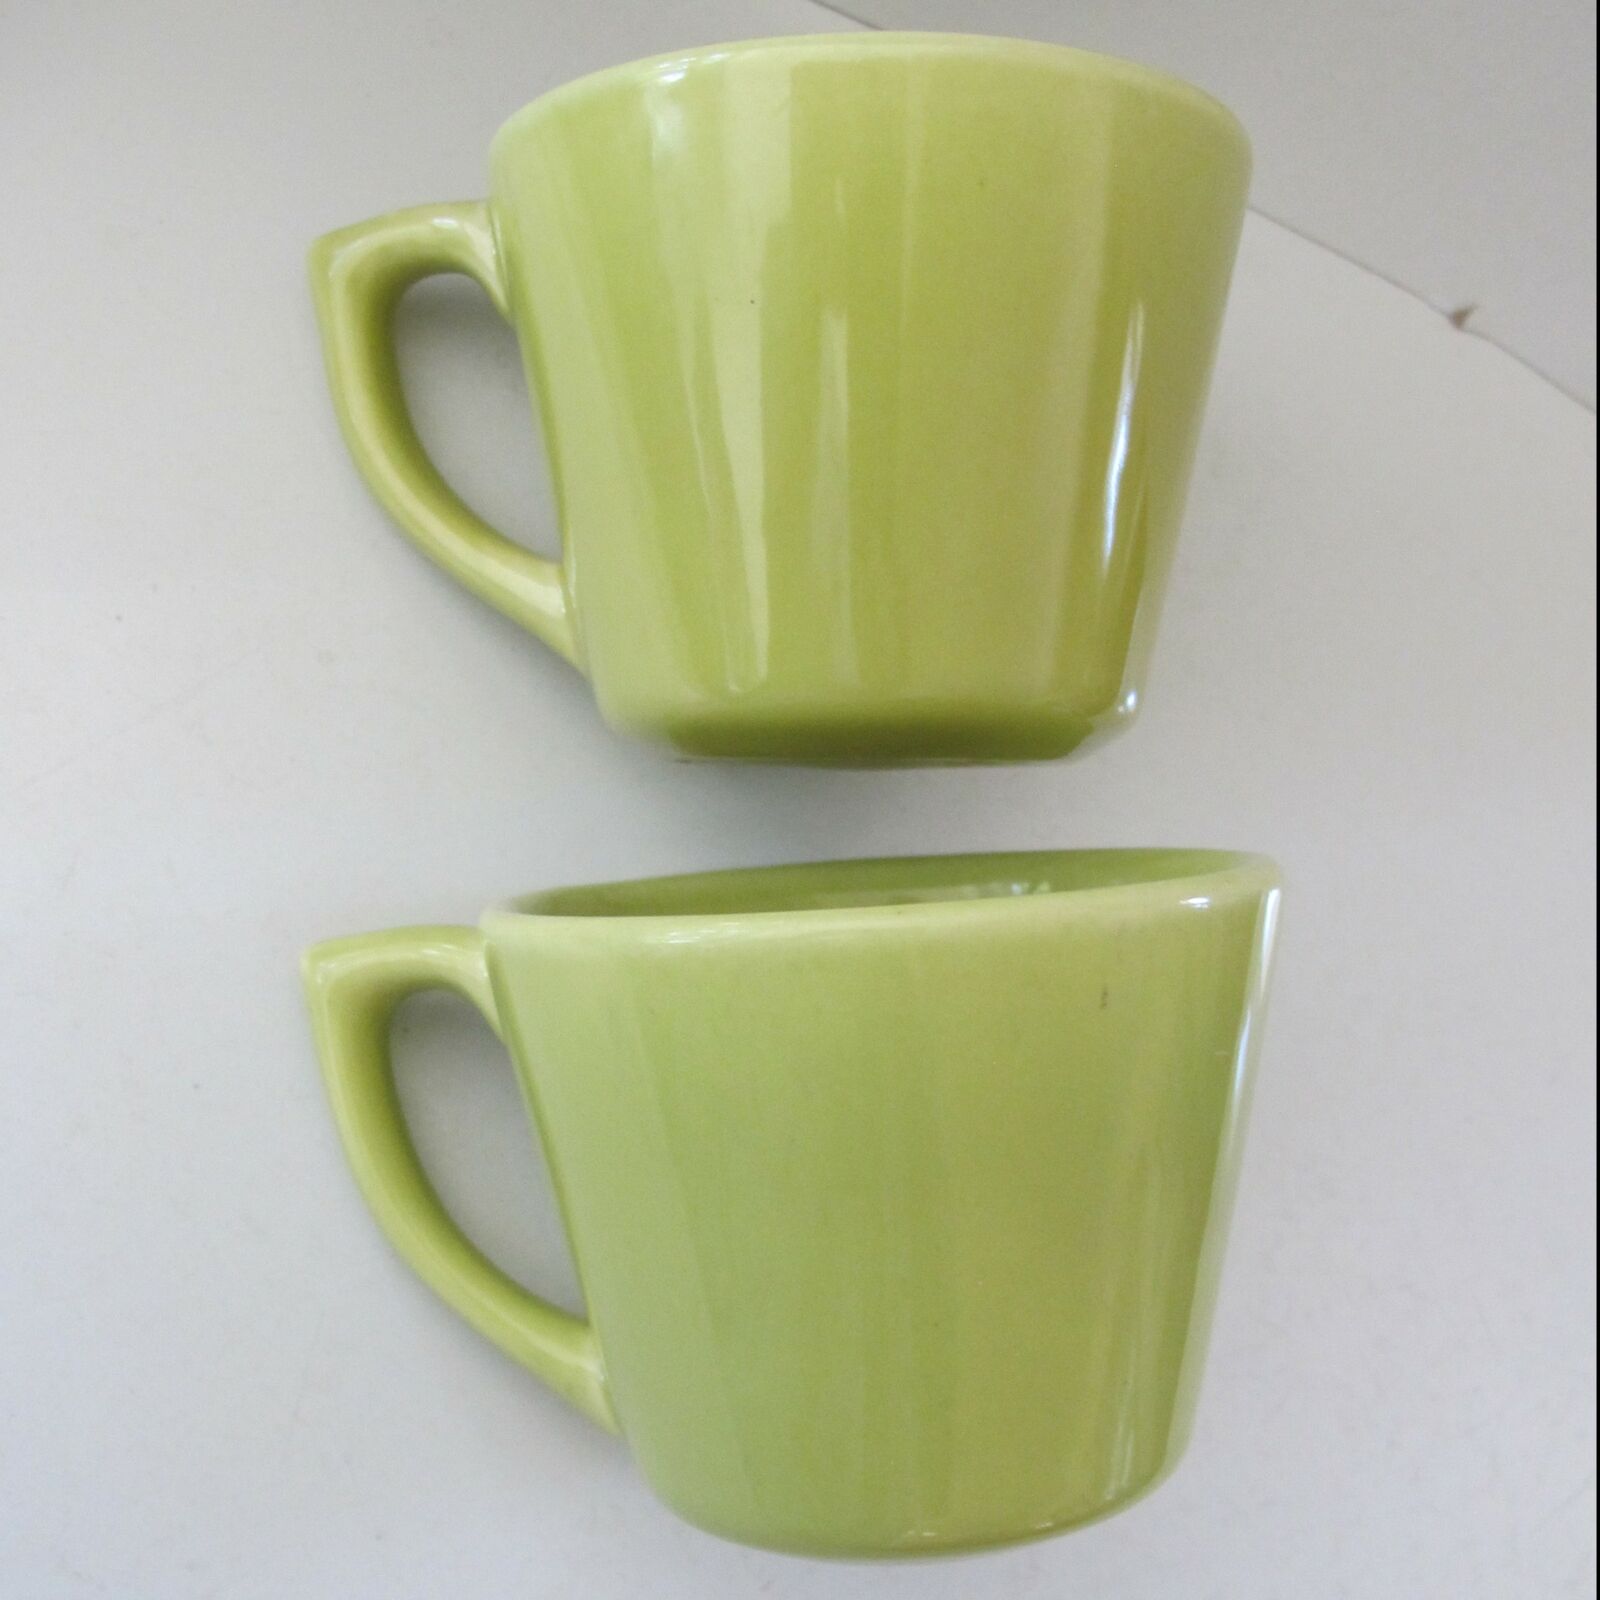 Lot 2 Vintage Bauer Coffee Cup Mug Al Fresco La Linda Chartreuse Yellow Green